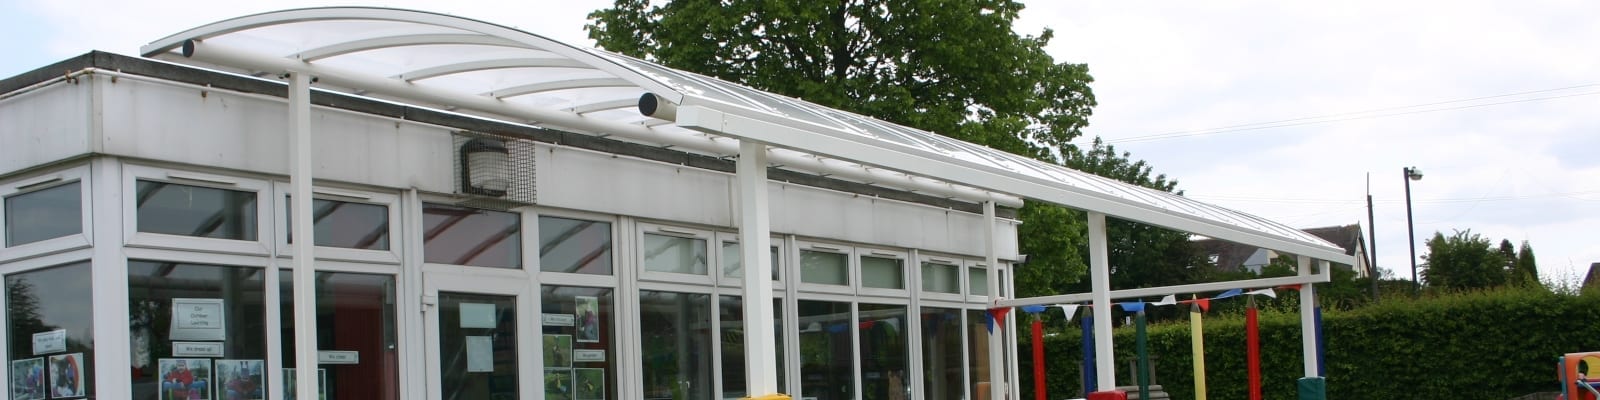 Castlefort JMI School Add White Canopy